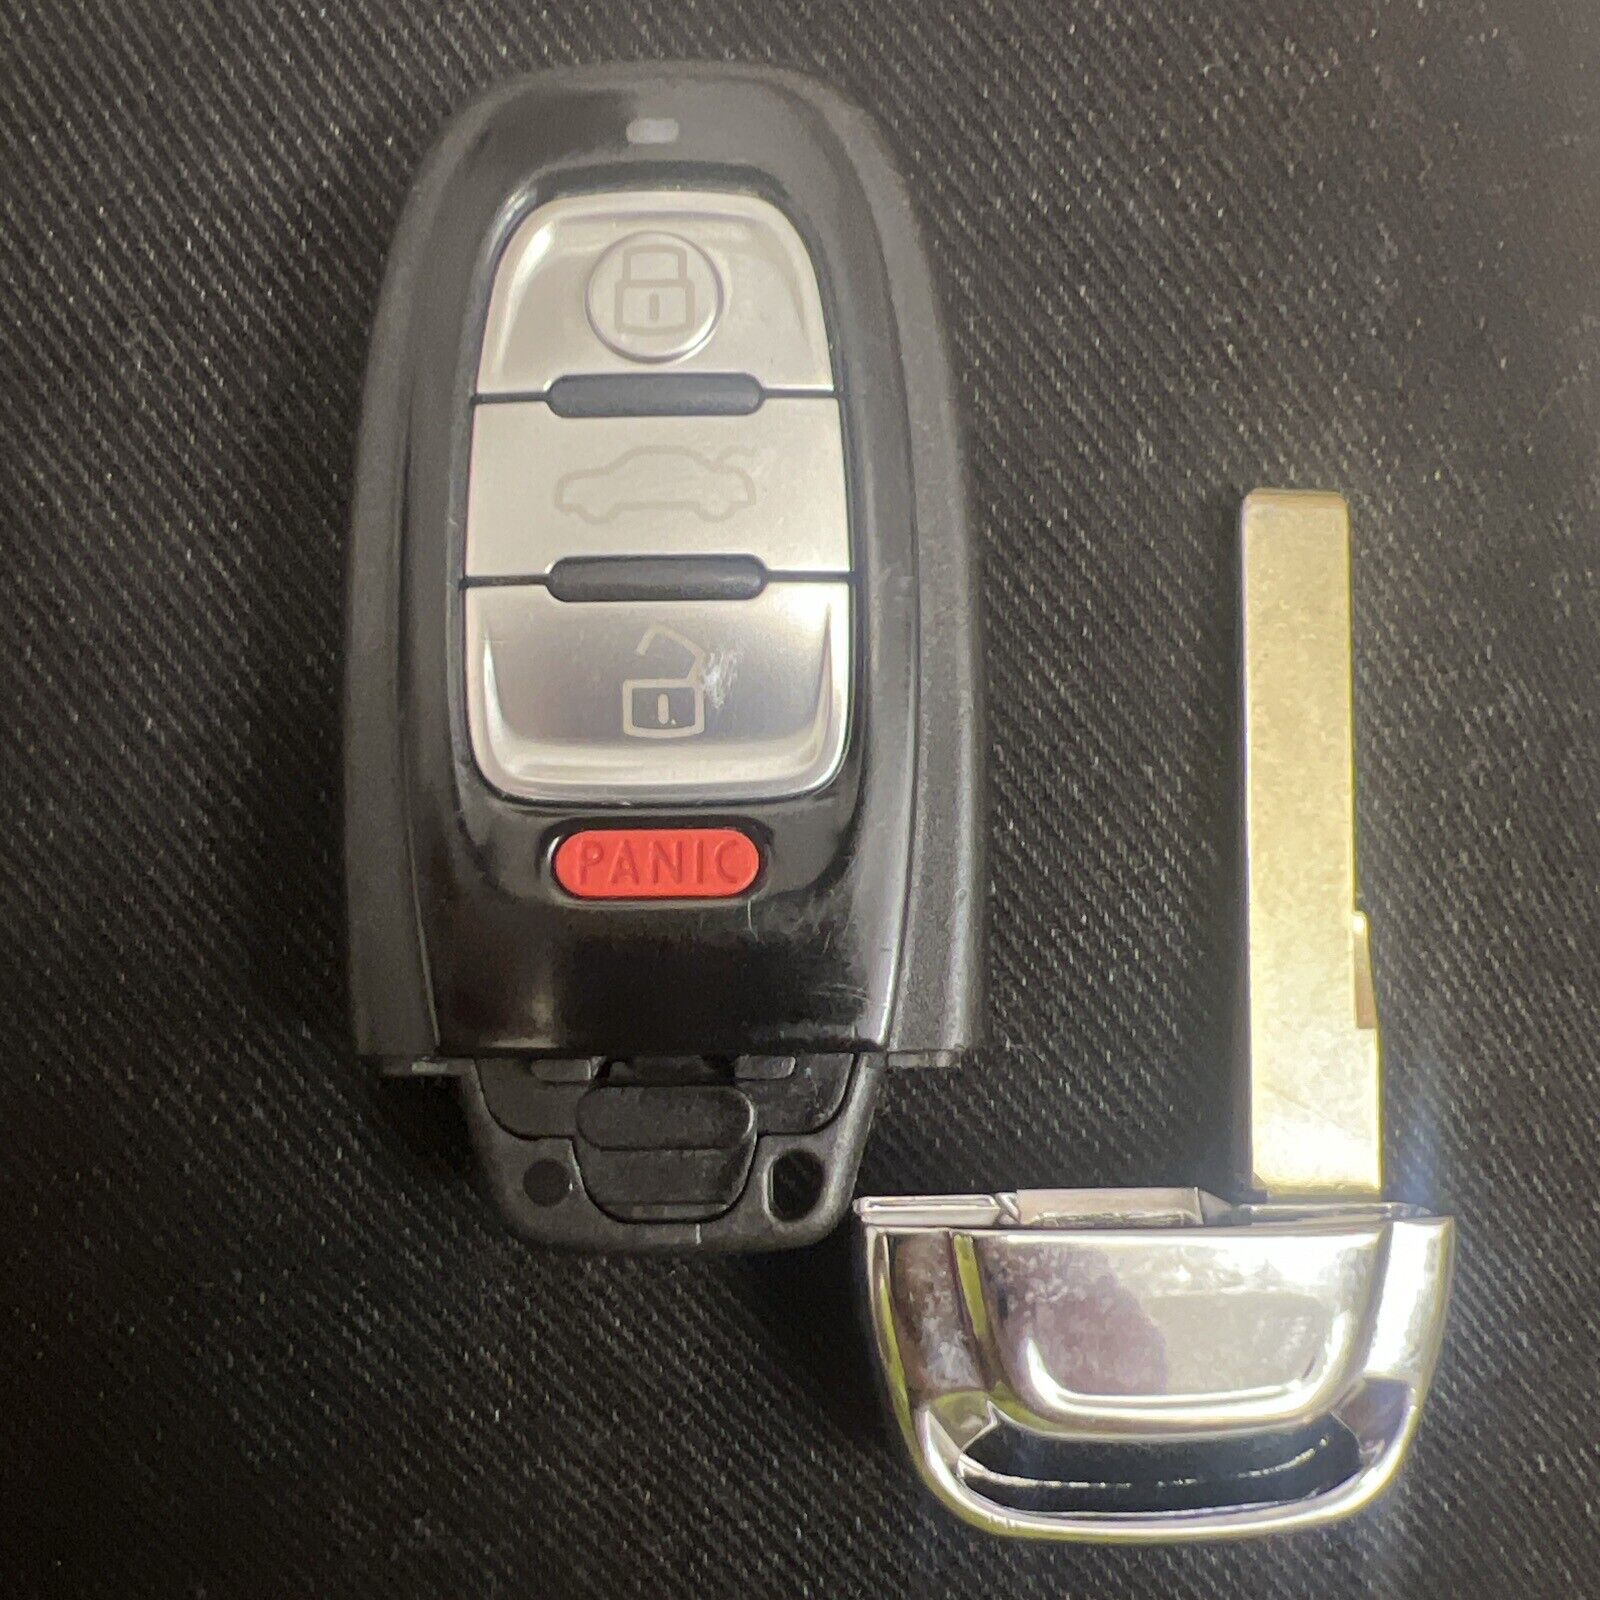 IYZFBSB802 Unlocked OEM Audi S5 WITH Comfort access 4H0 959 754 uncut key Blade